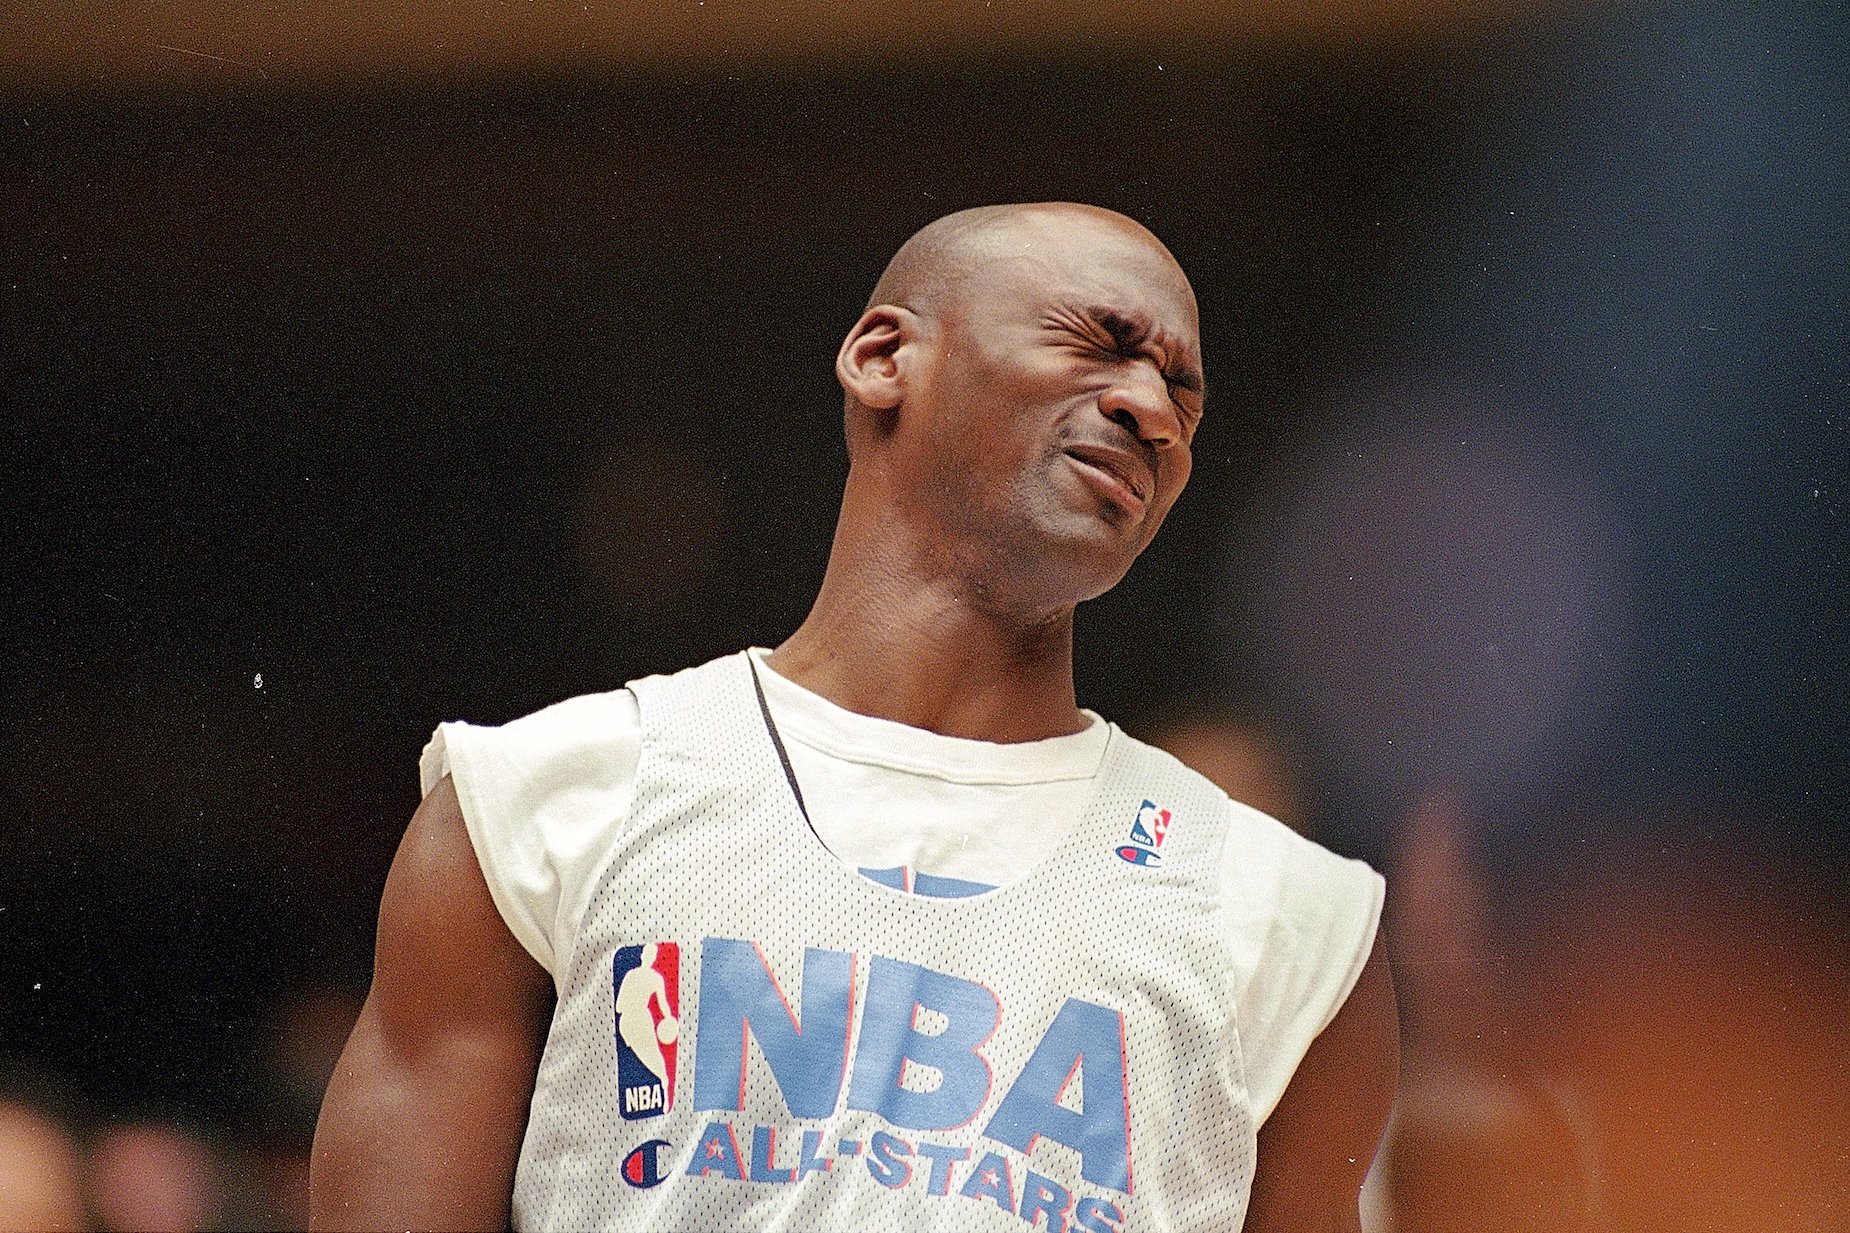 NBA legend Michael Jordan reacts ahead of the 1997 All-Star game.